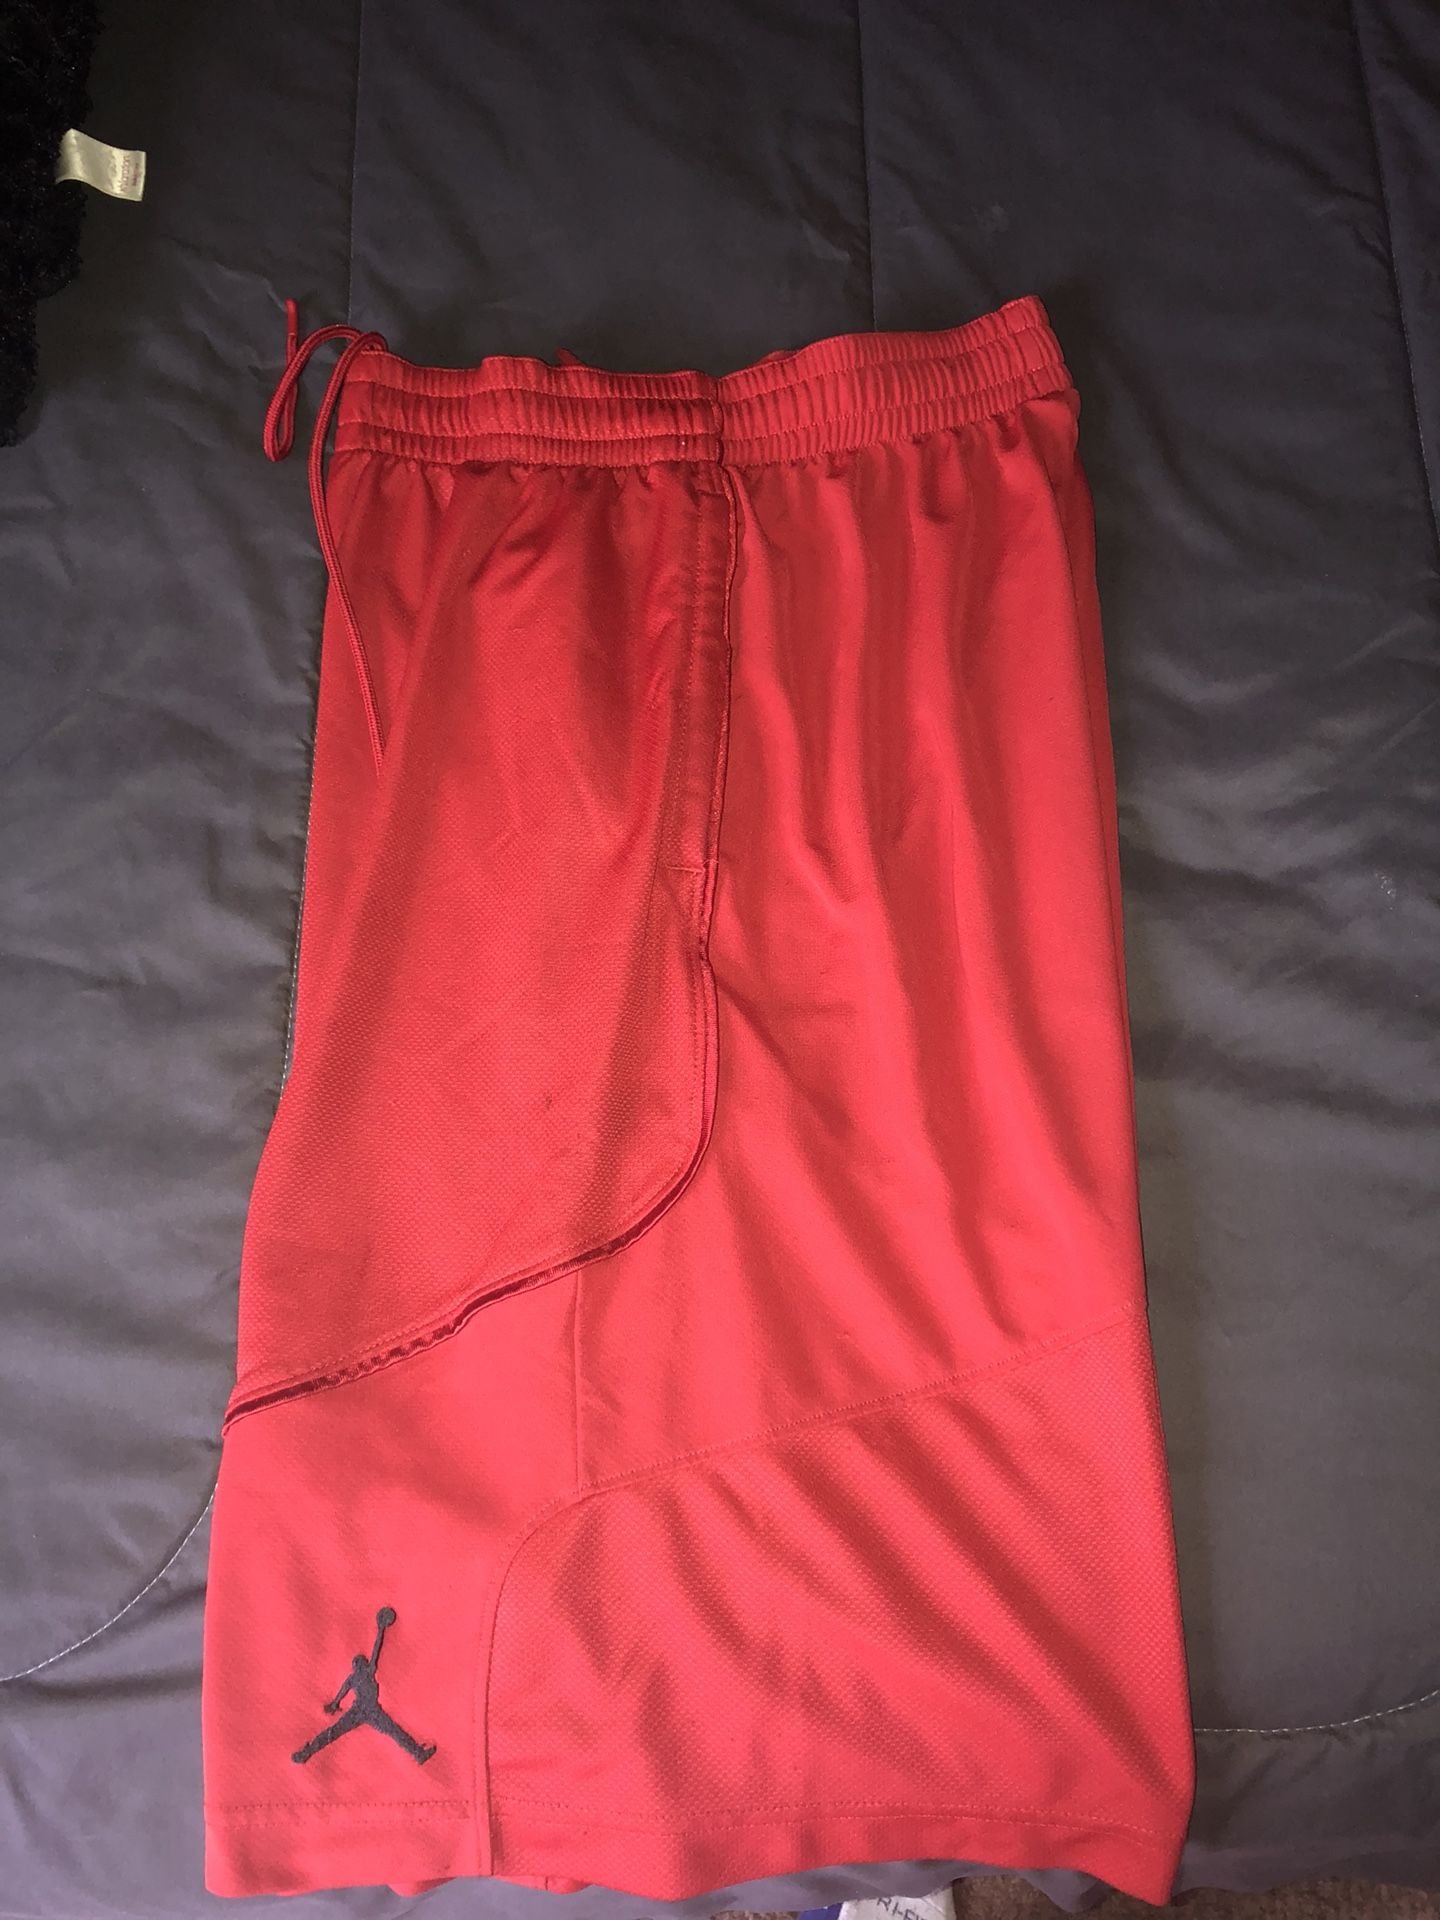 Nike Air Jordan Red Shorts